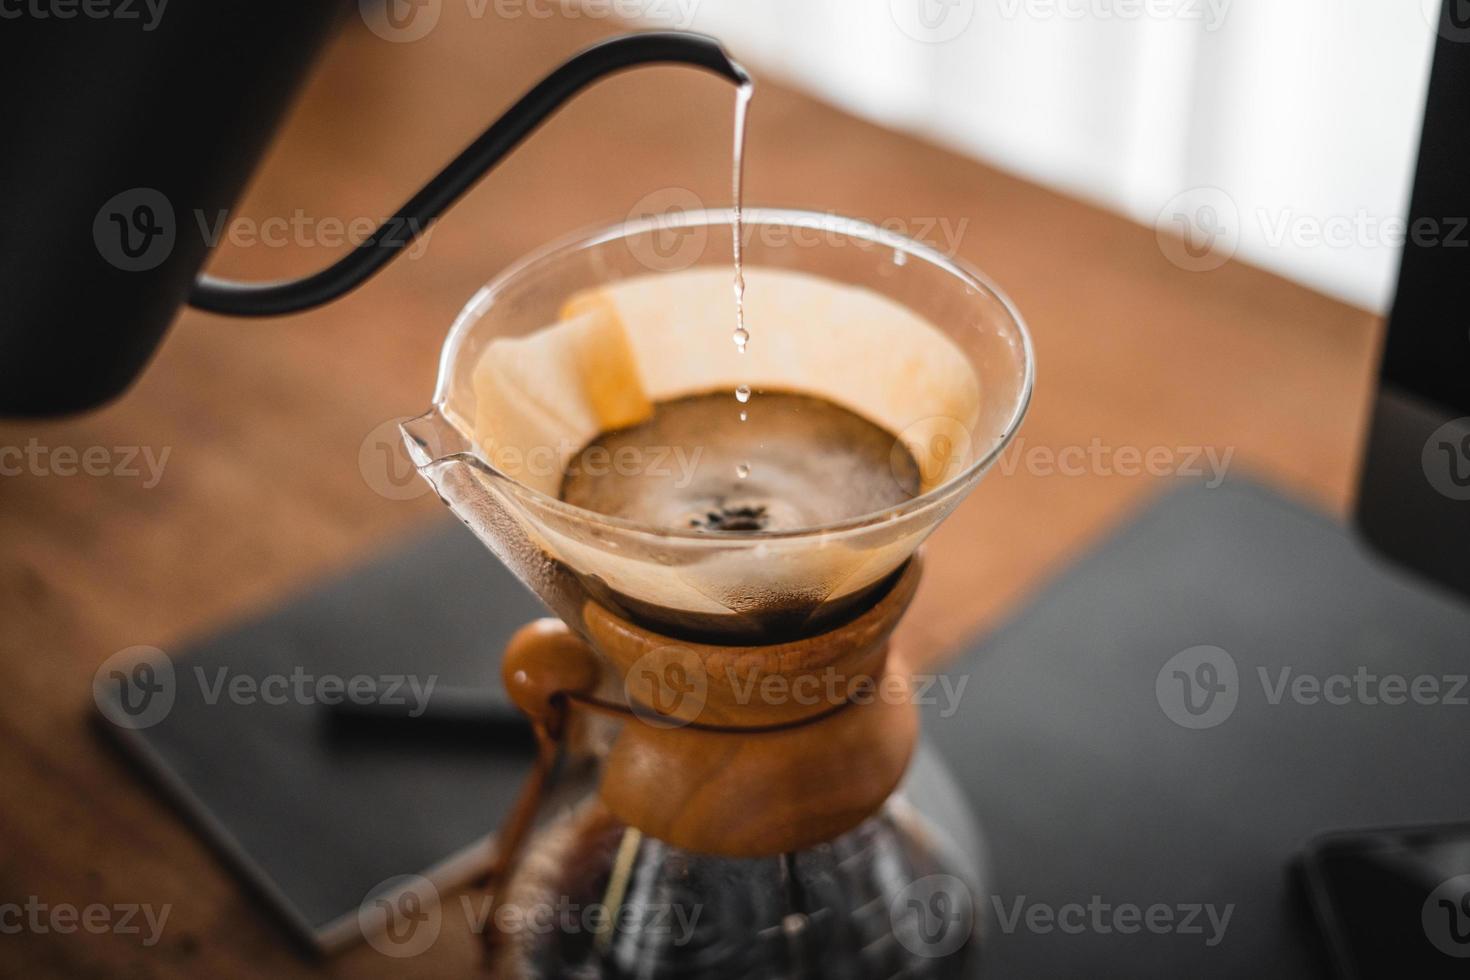 chemex per birra caffè, caffè chemex versare al di sopra di caffè creatore e gocciolare bollitore foto